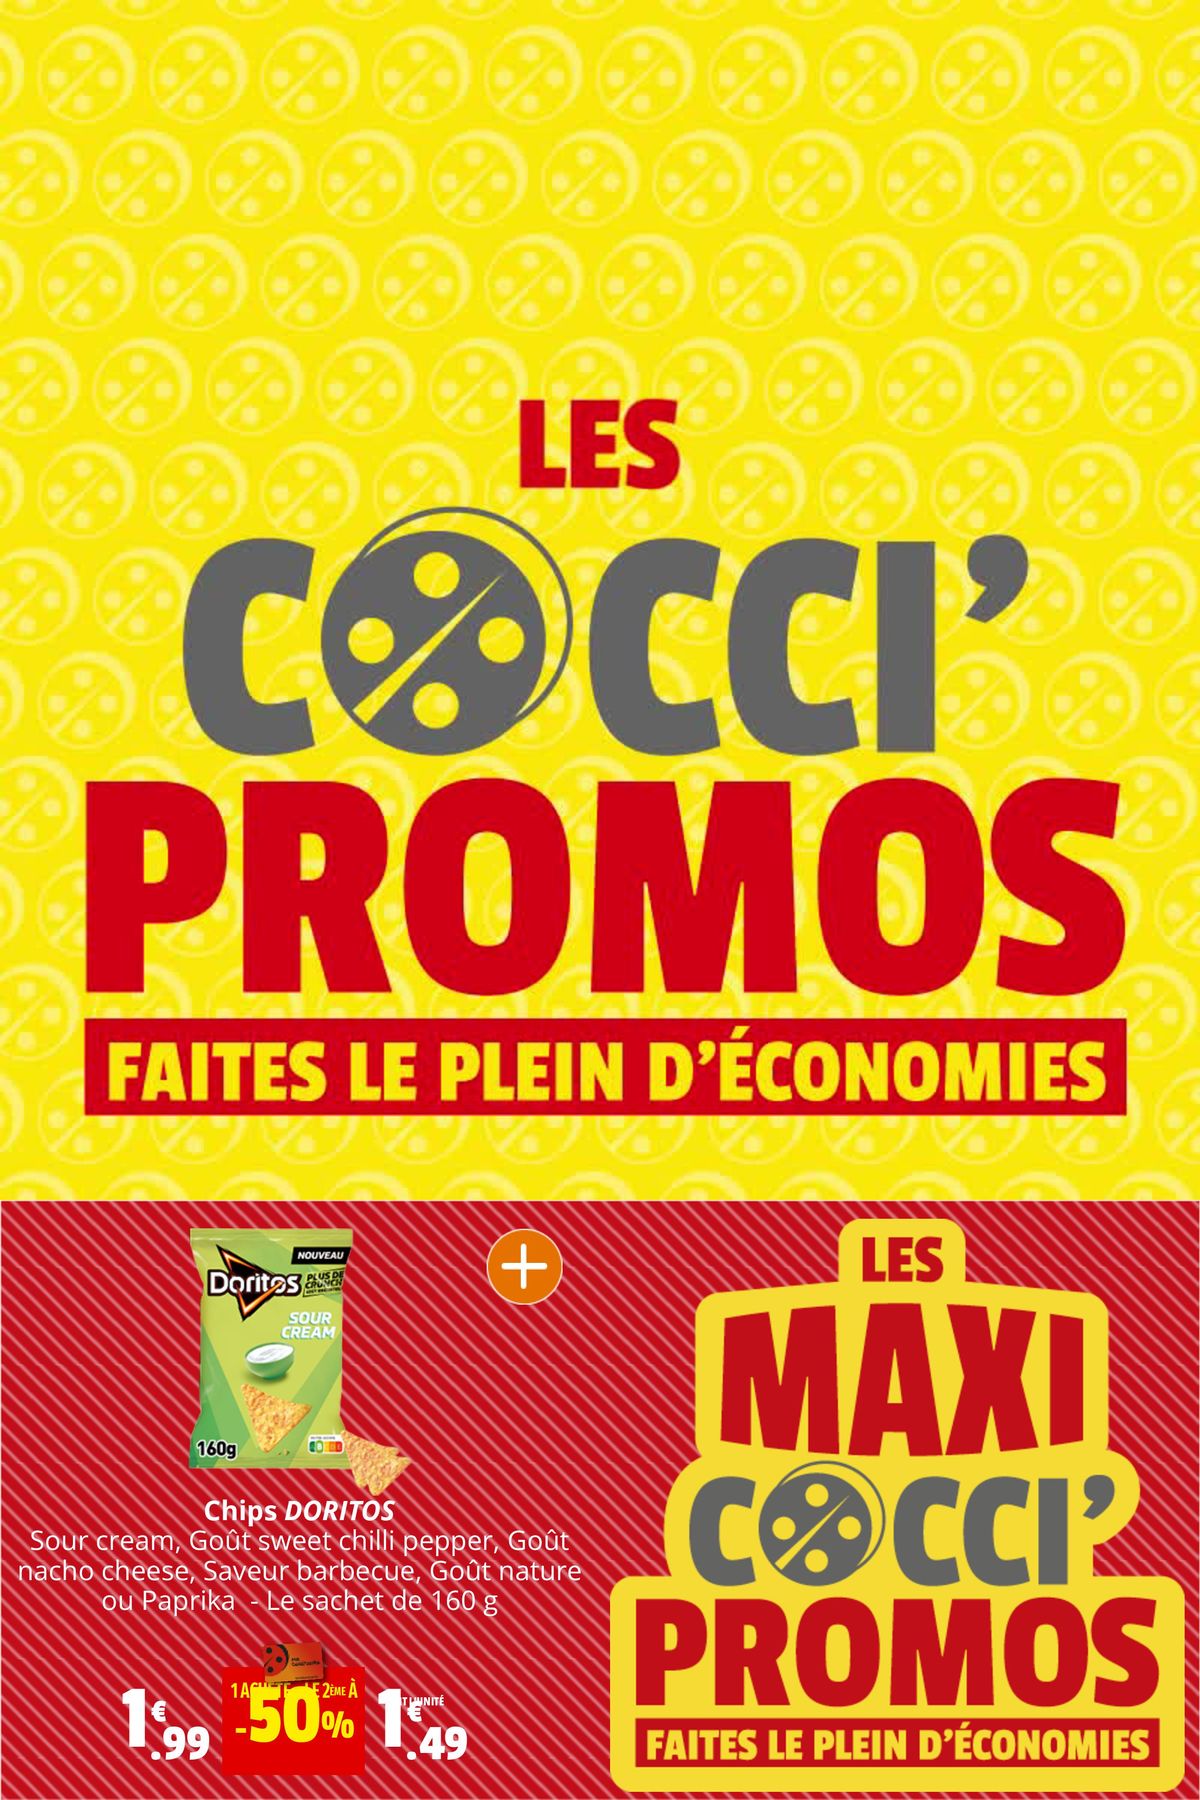 Catalogue COCCI' PROMOS, page 00003